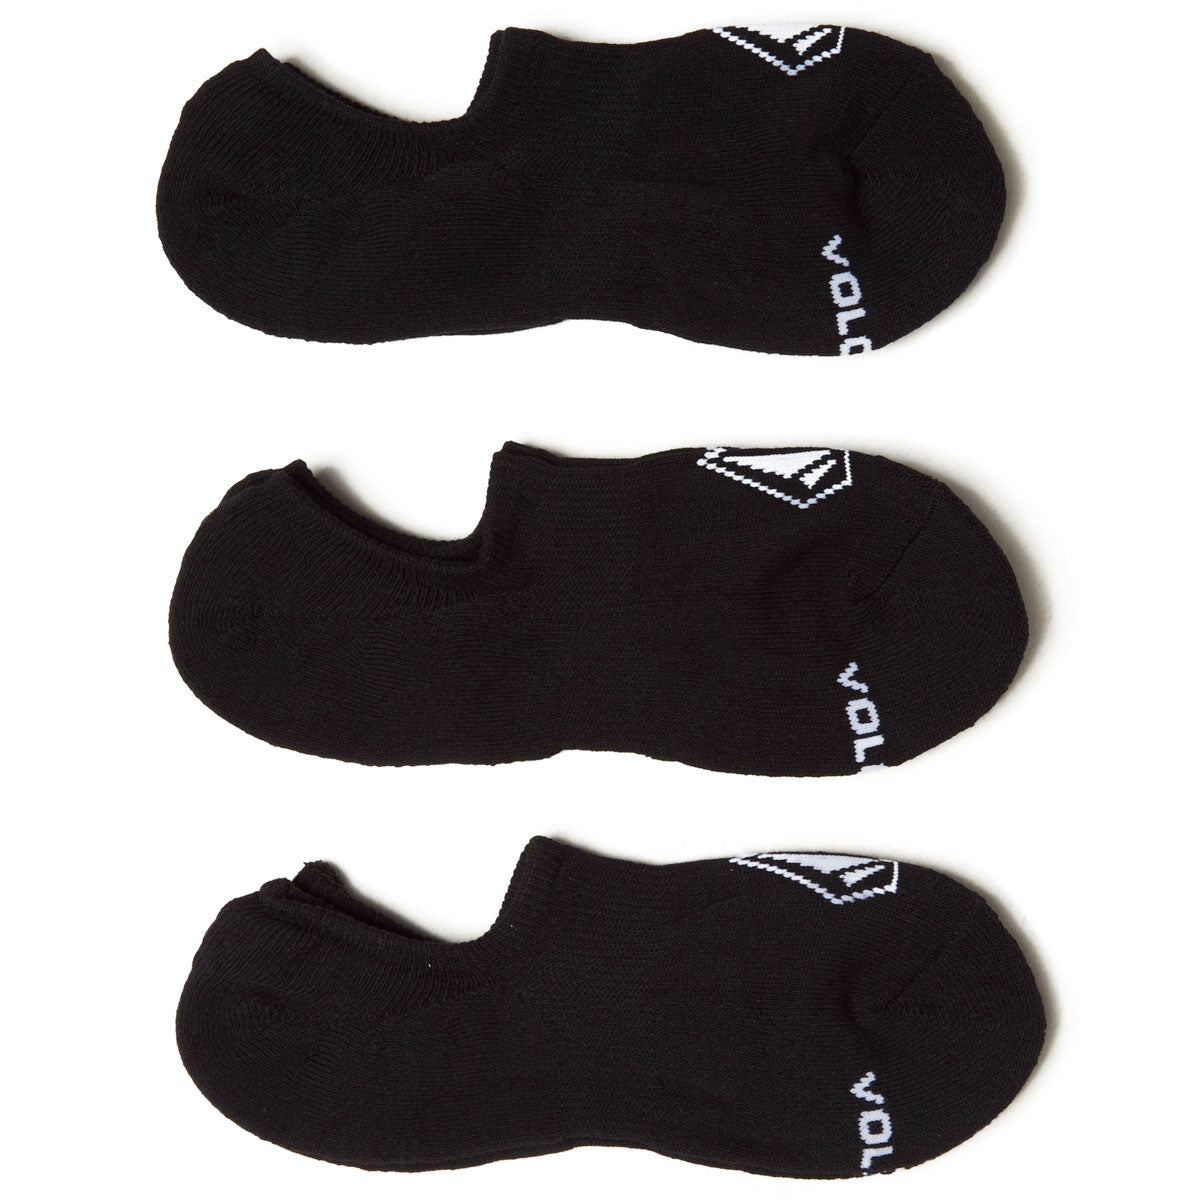 Volcom No Show Stone 3 Pack of Socks - Black image 1